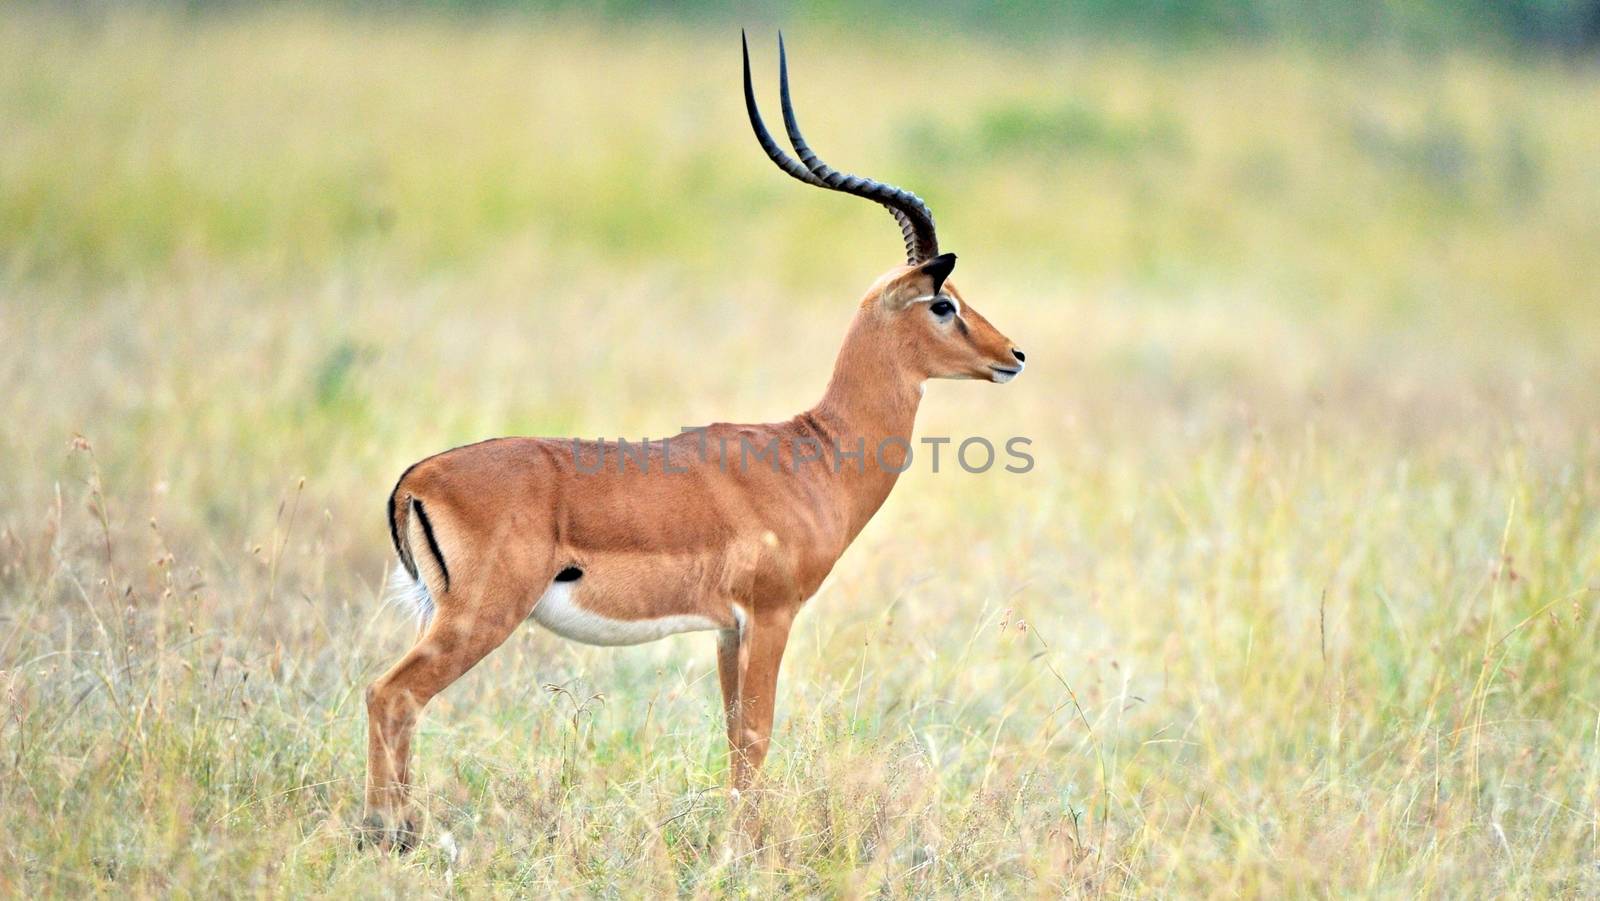 impala in the wild by moizhusein